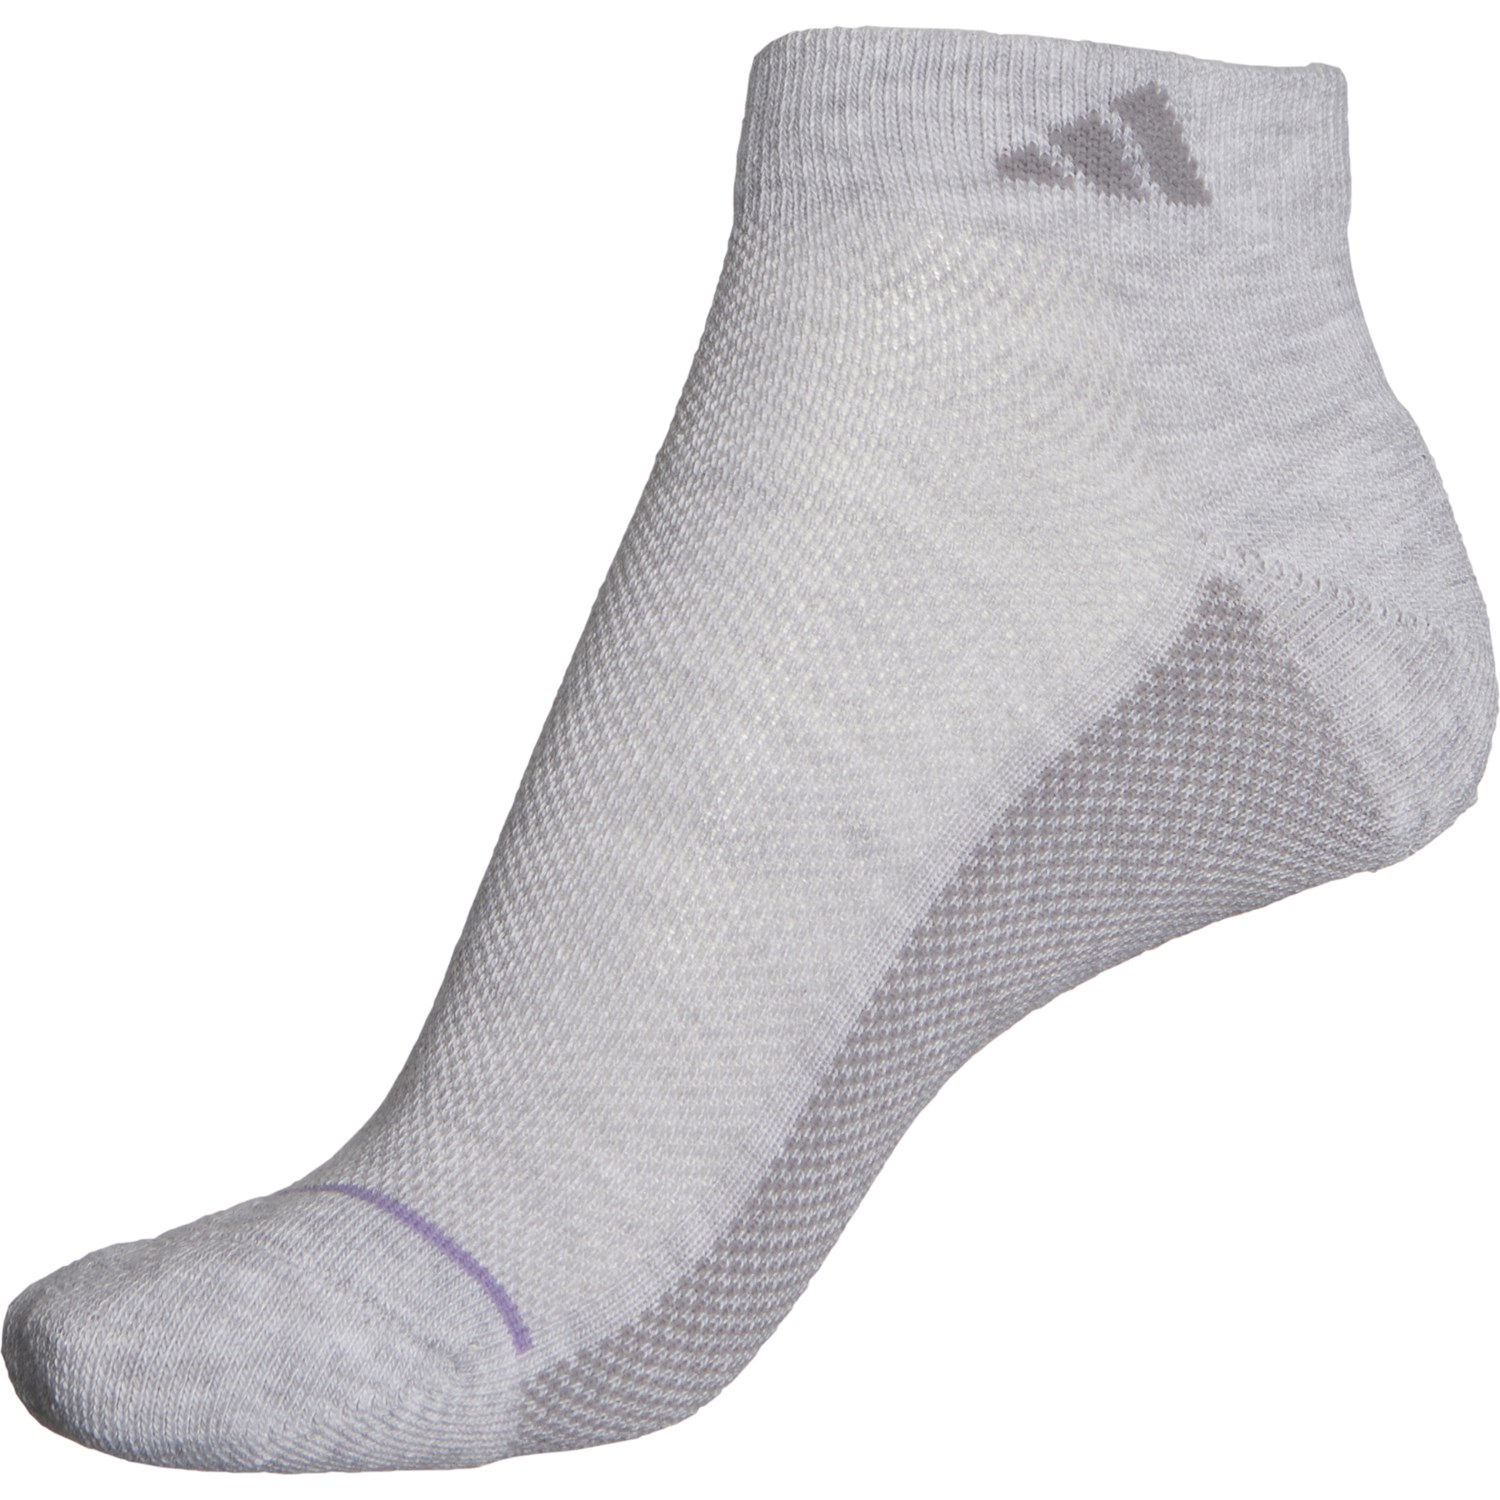 adidas Superlite Low-Cut Socks (For Women) - Save 57%